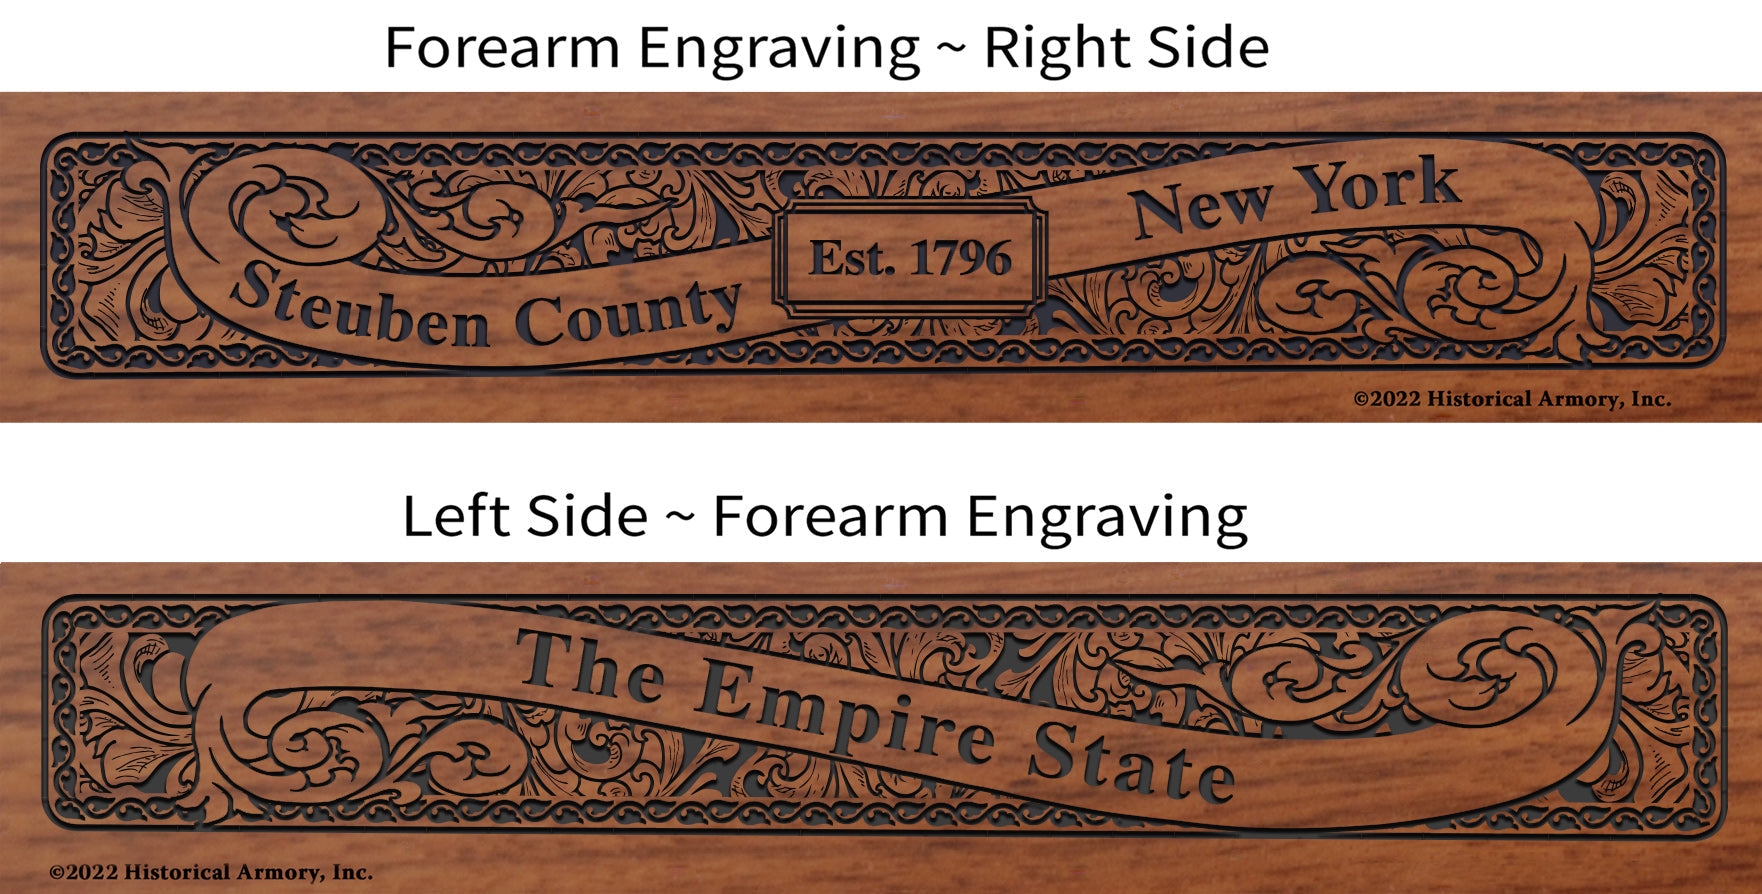 Steuben County New York Engraved Rifle Forearm